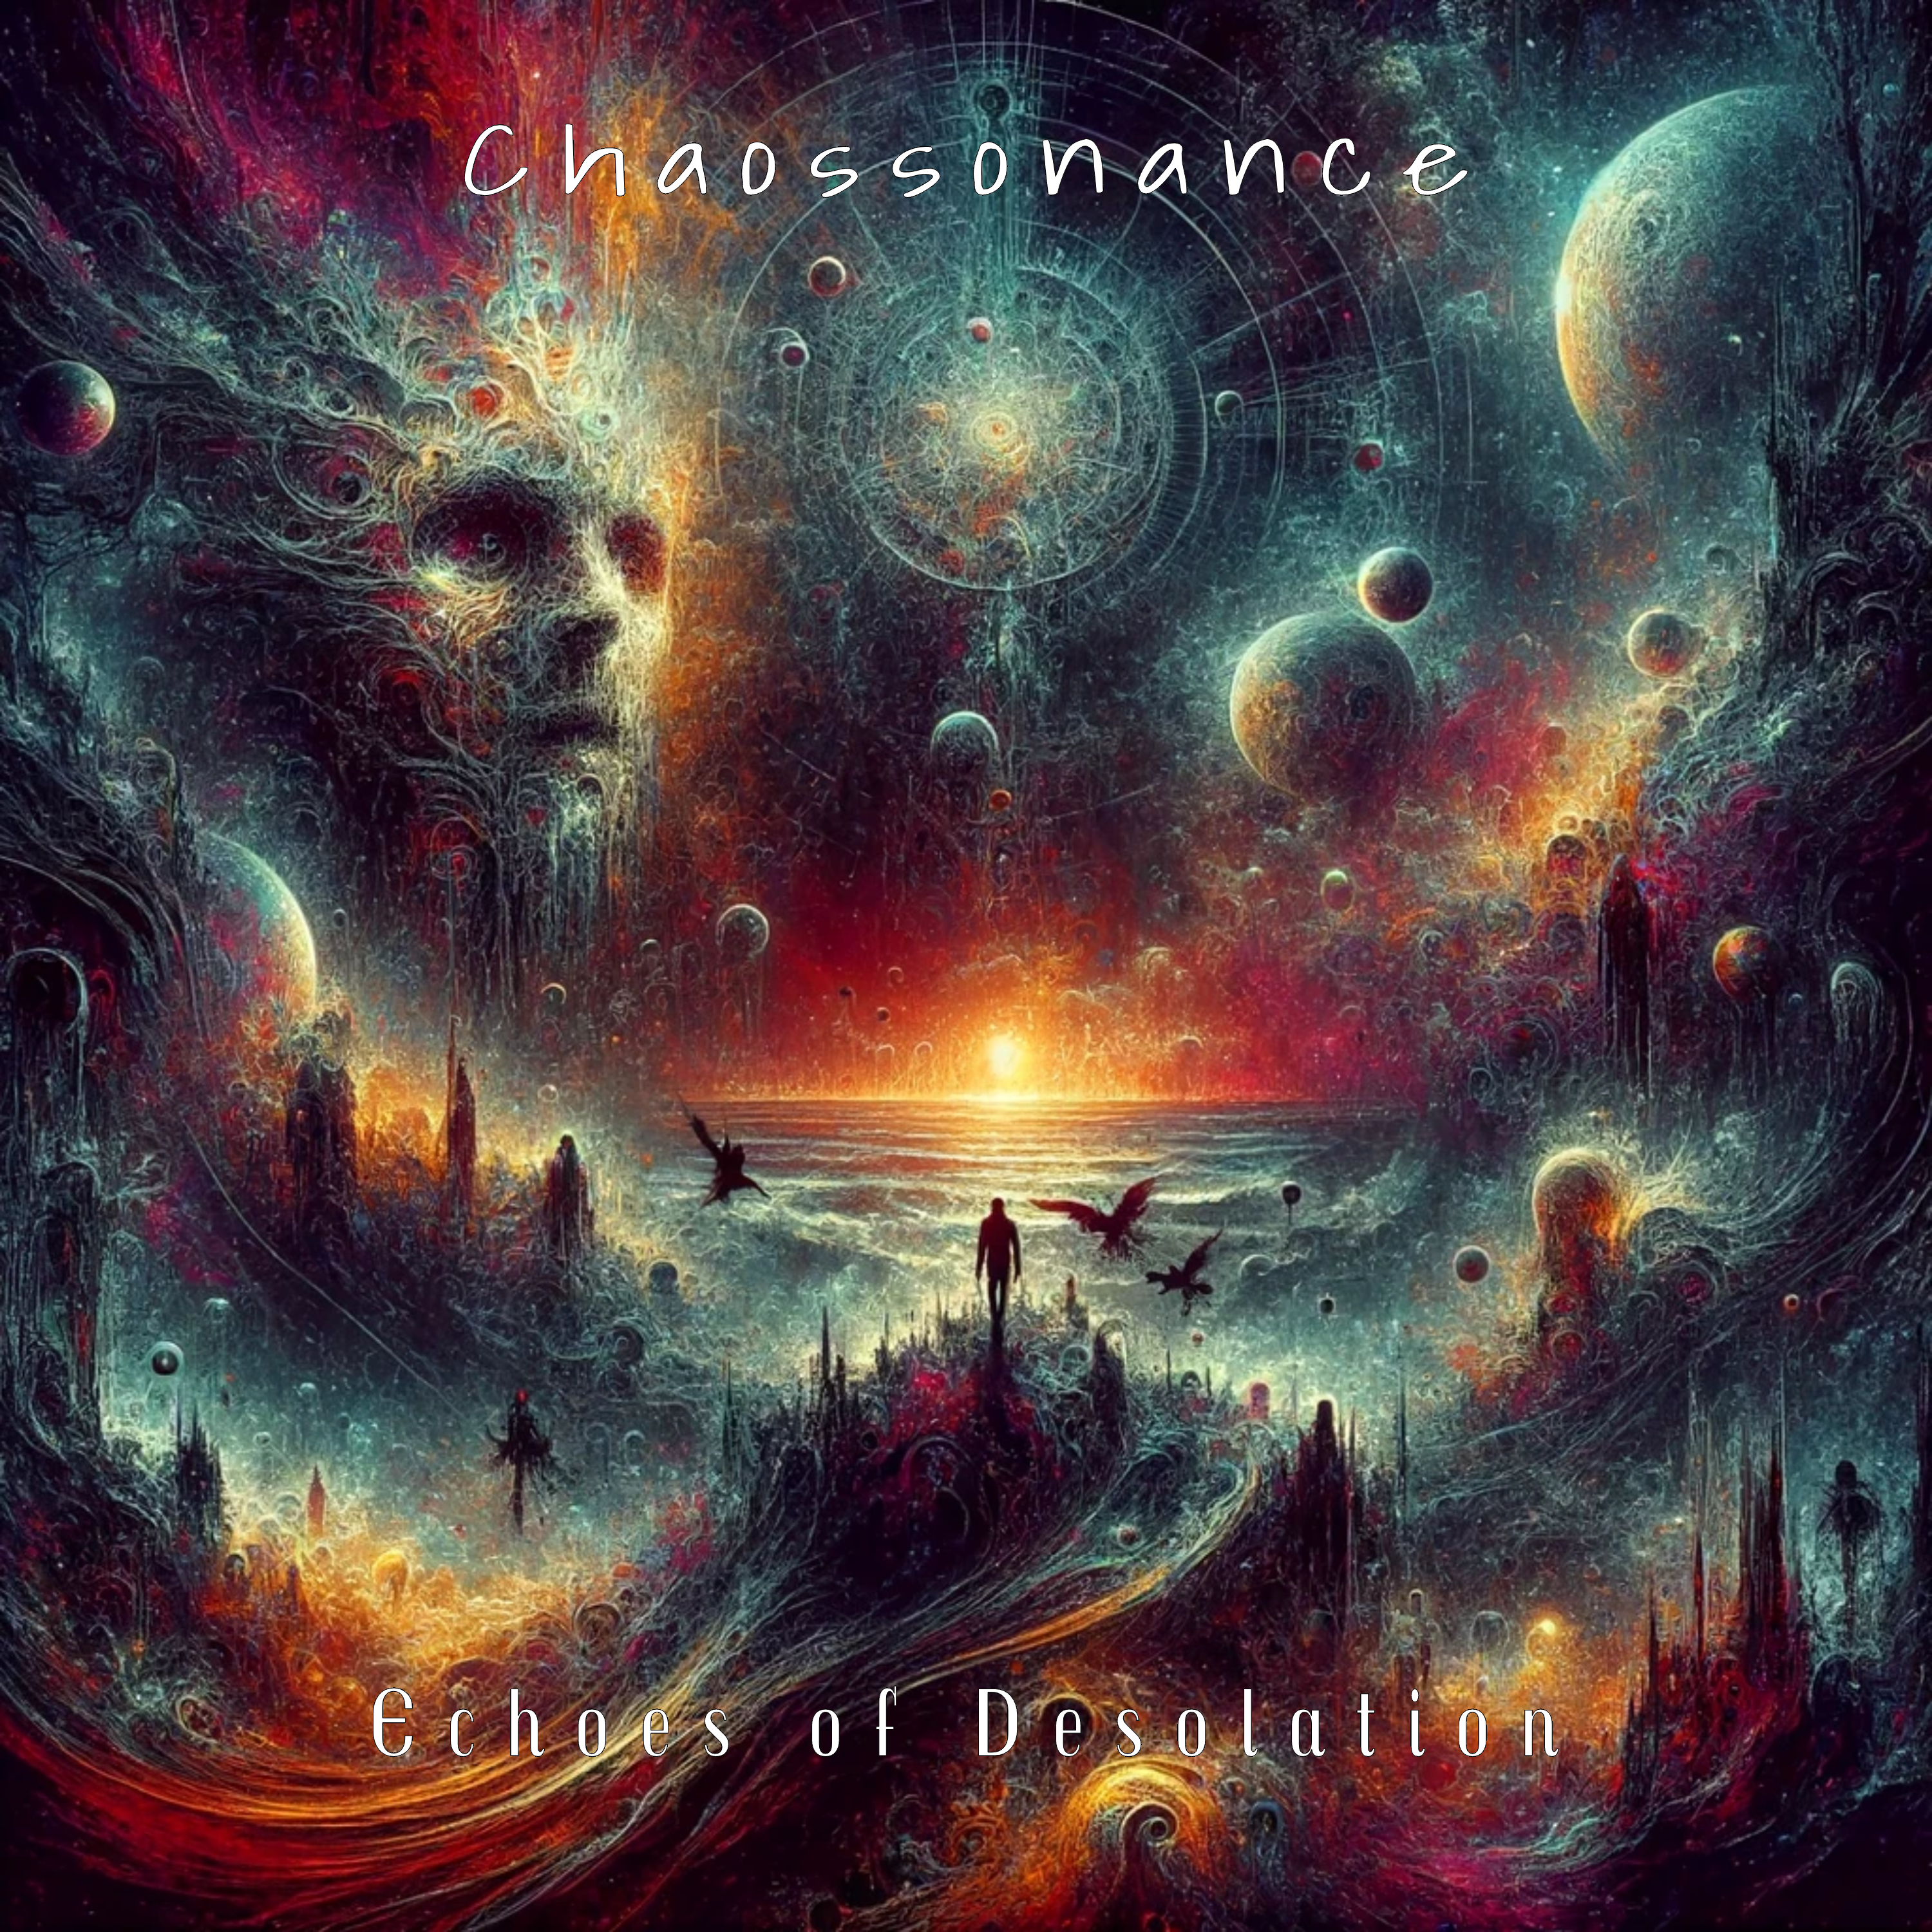 Chaossonance – Echoes of Desolation